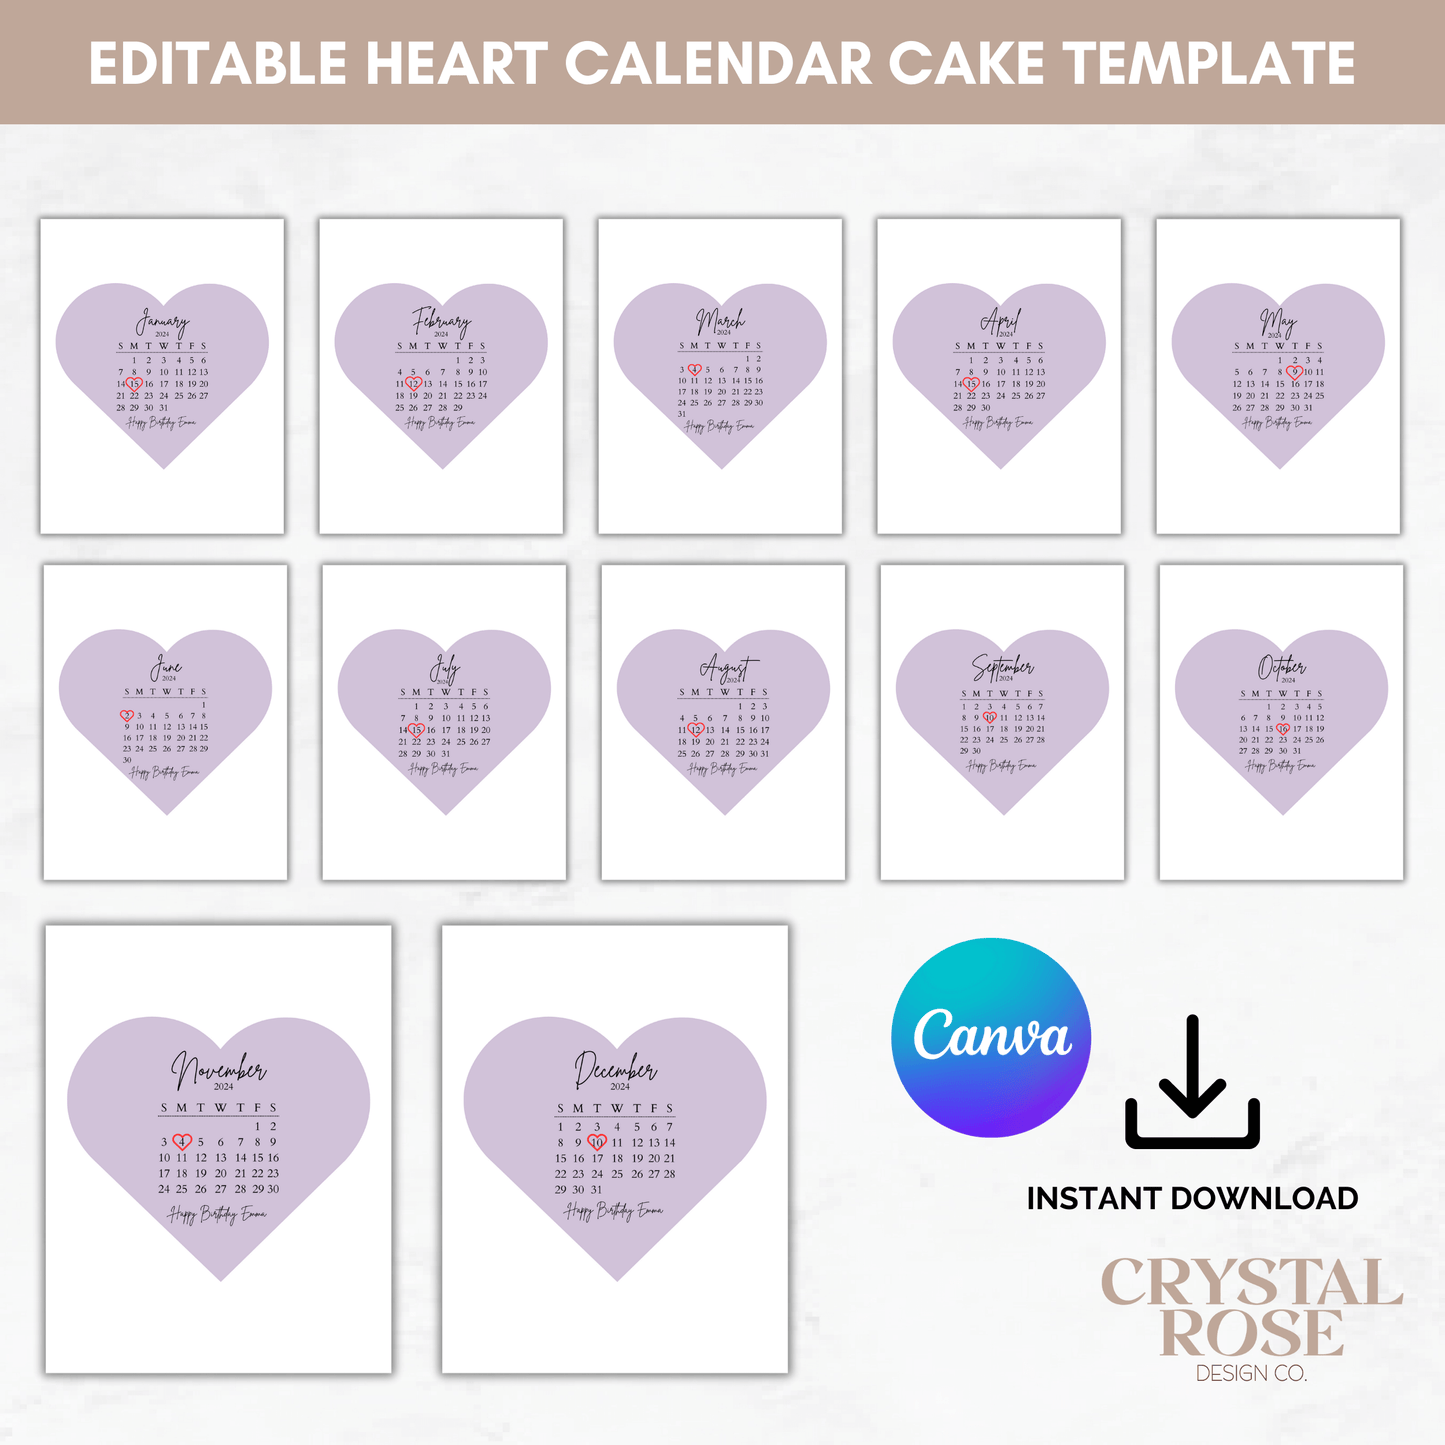 Editable Calendar Heart Shape Cut-out Template, Burnaway Cake Topper, Burnaway Cake Template, Heart Shaped Cake Topper Template